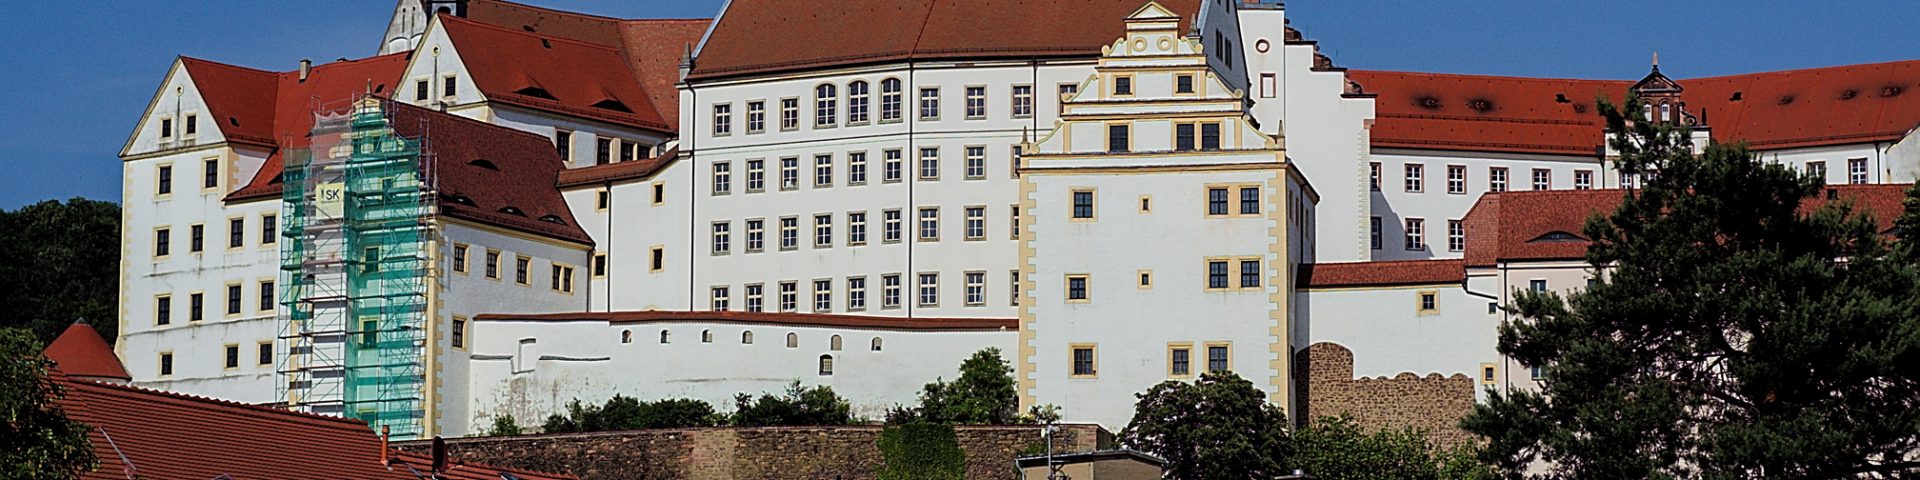 Panorama Schloss Colditz Sachsen